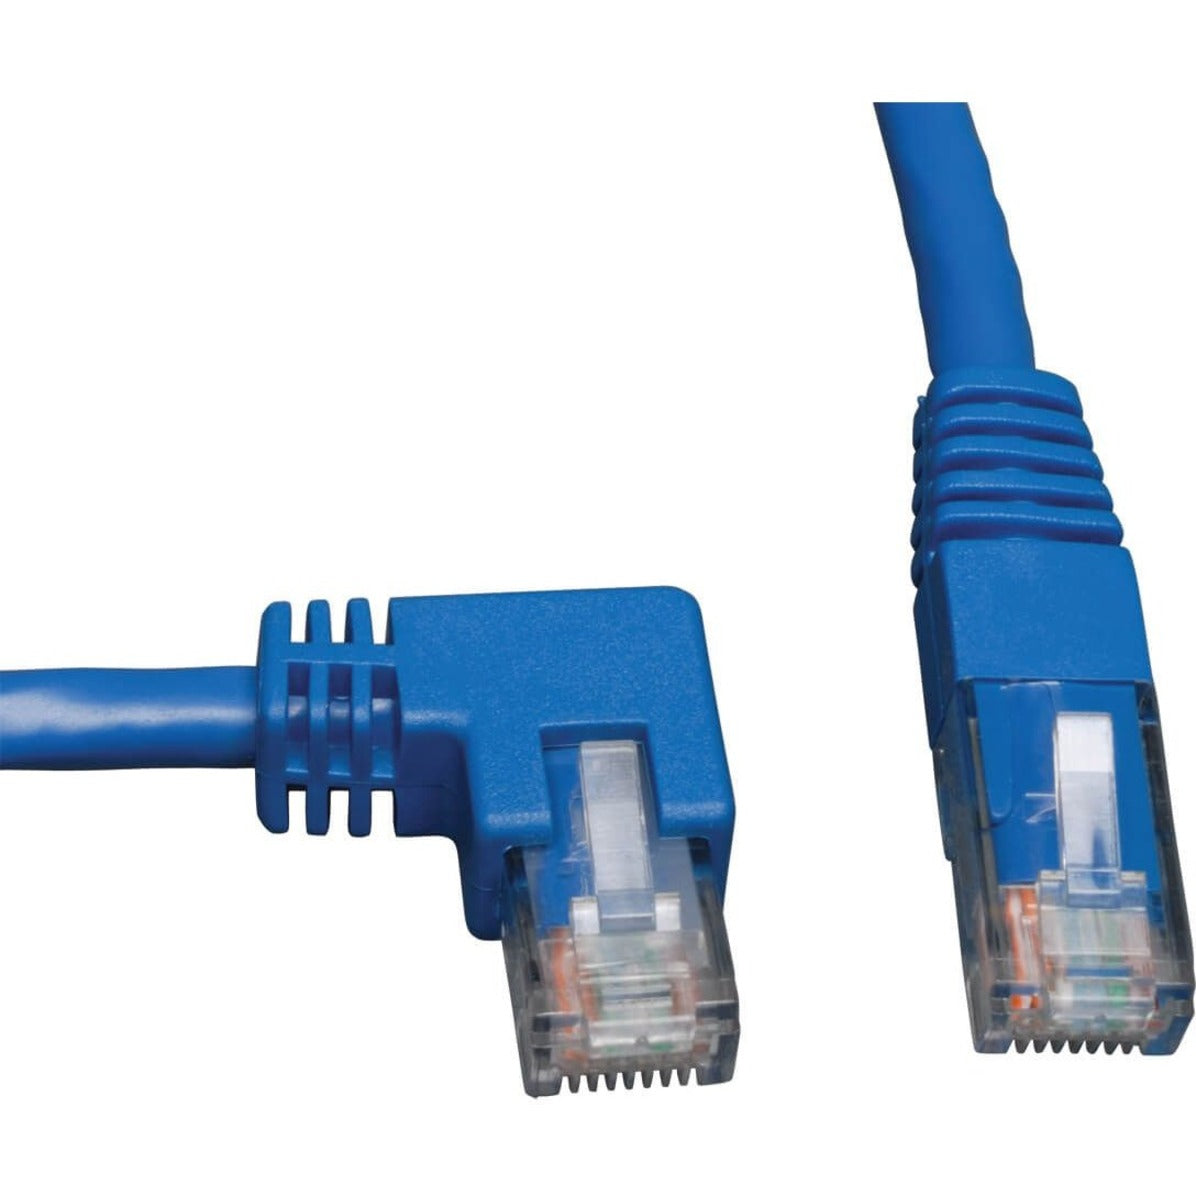 Tripp Lite by Eaton N204-003-BL-LA Cat6 Patch Cable 3 ft Blue Molded Network Cable トリップライト イーソン N204-003-BL-LA Cat6 パッチケーブル 3フィート 青 モールデッド ネットワークケーブル